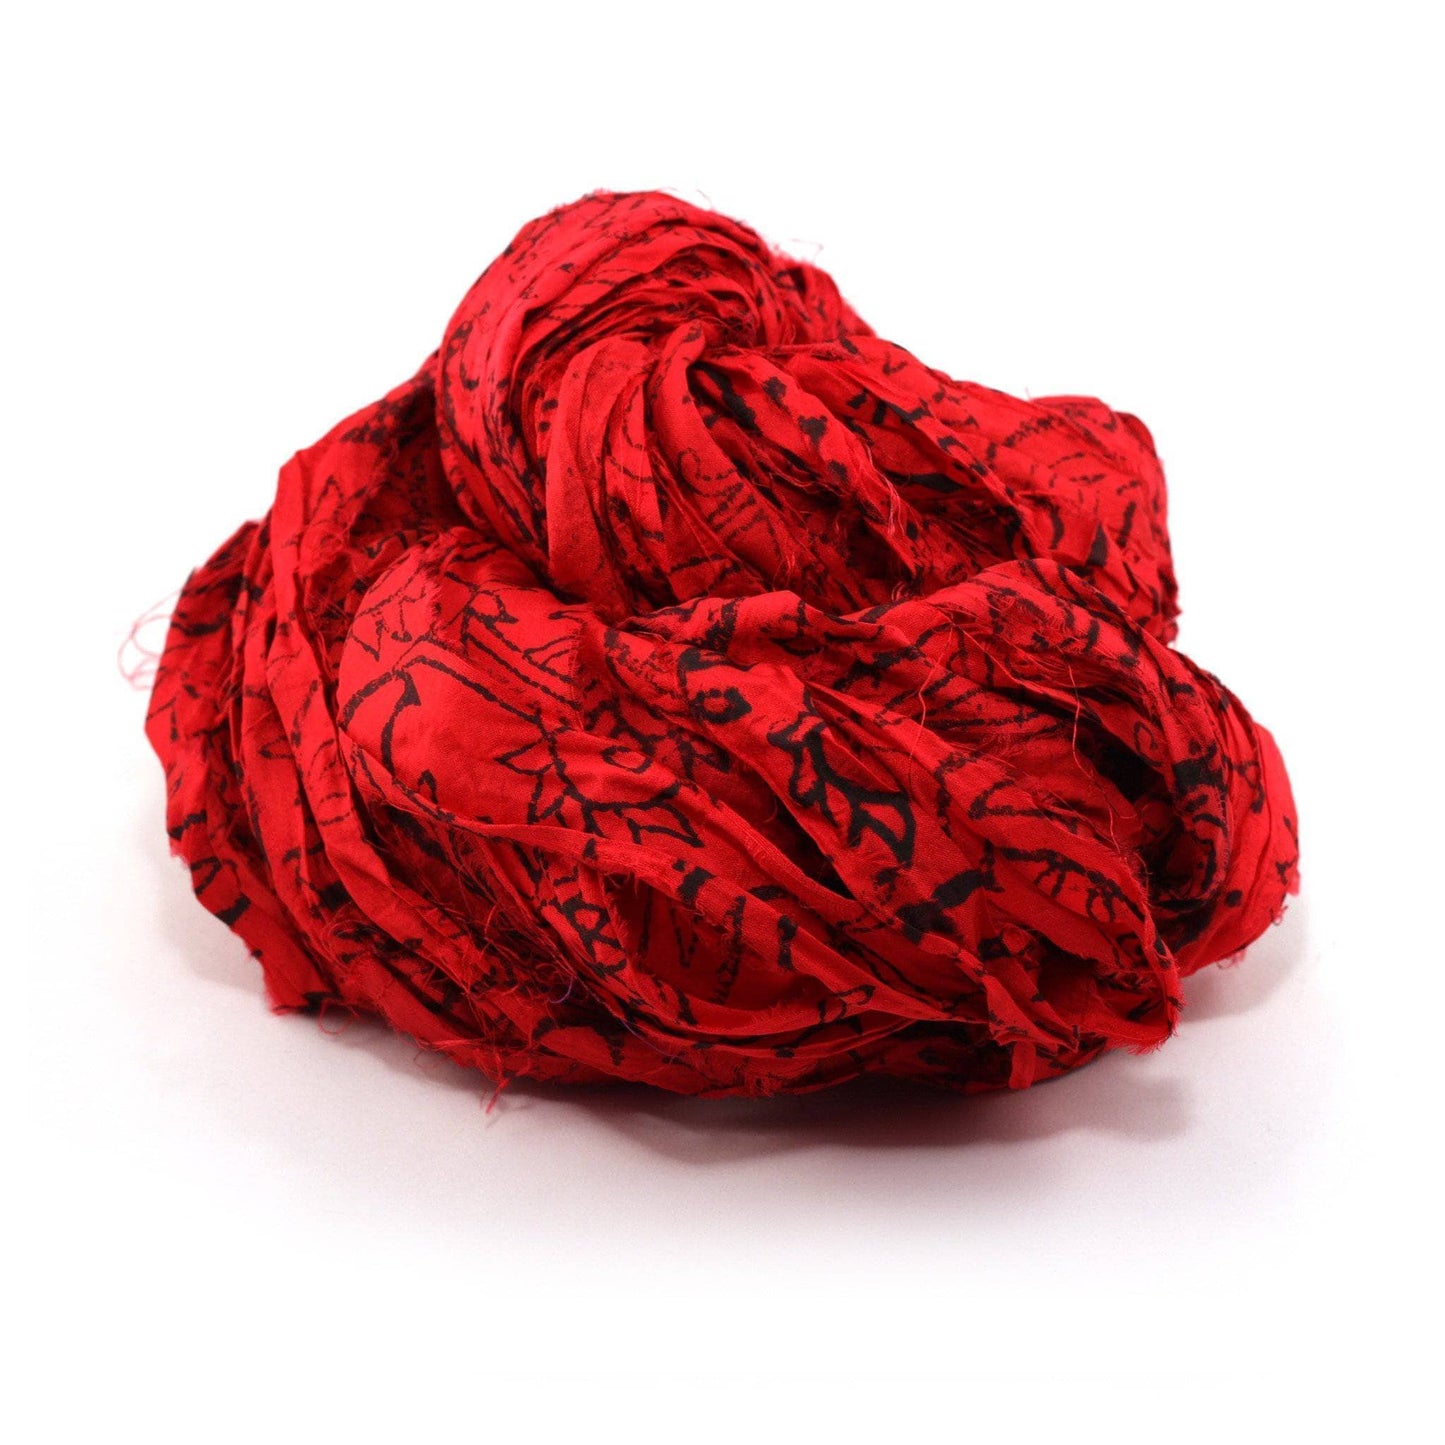 Block Printed Handmade Sari Silk Ribbon ball in Paisley Red on a white background